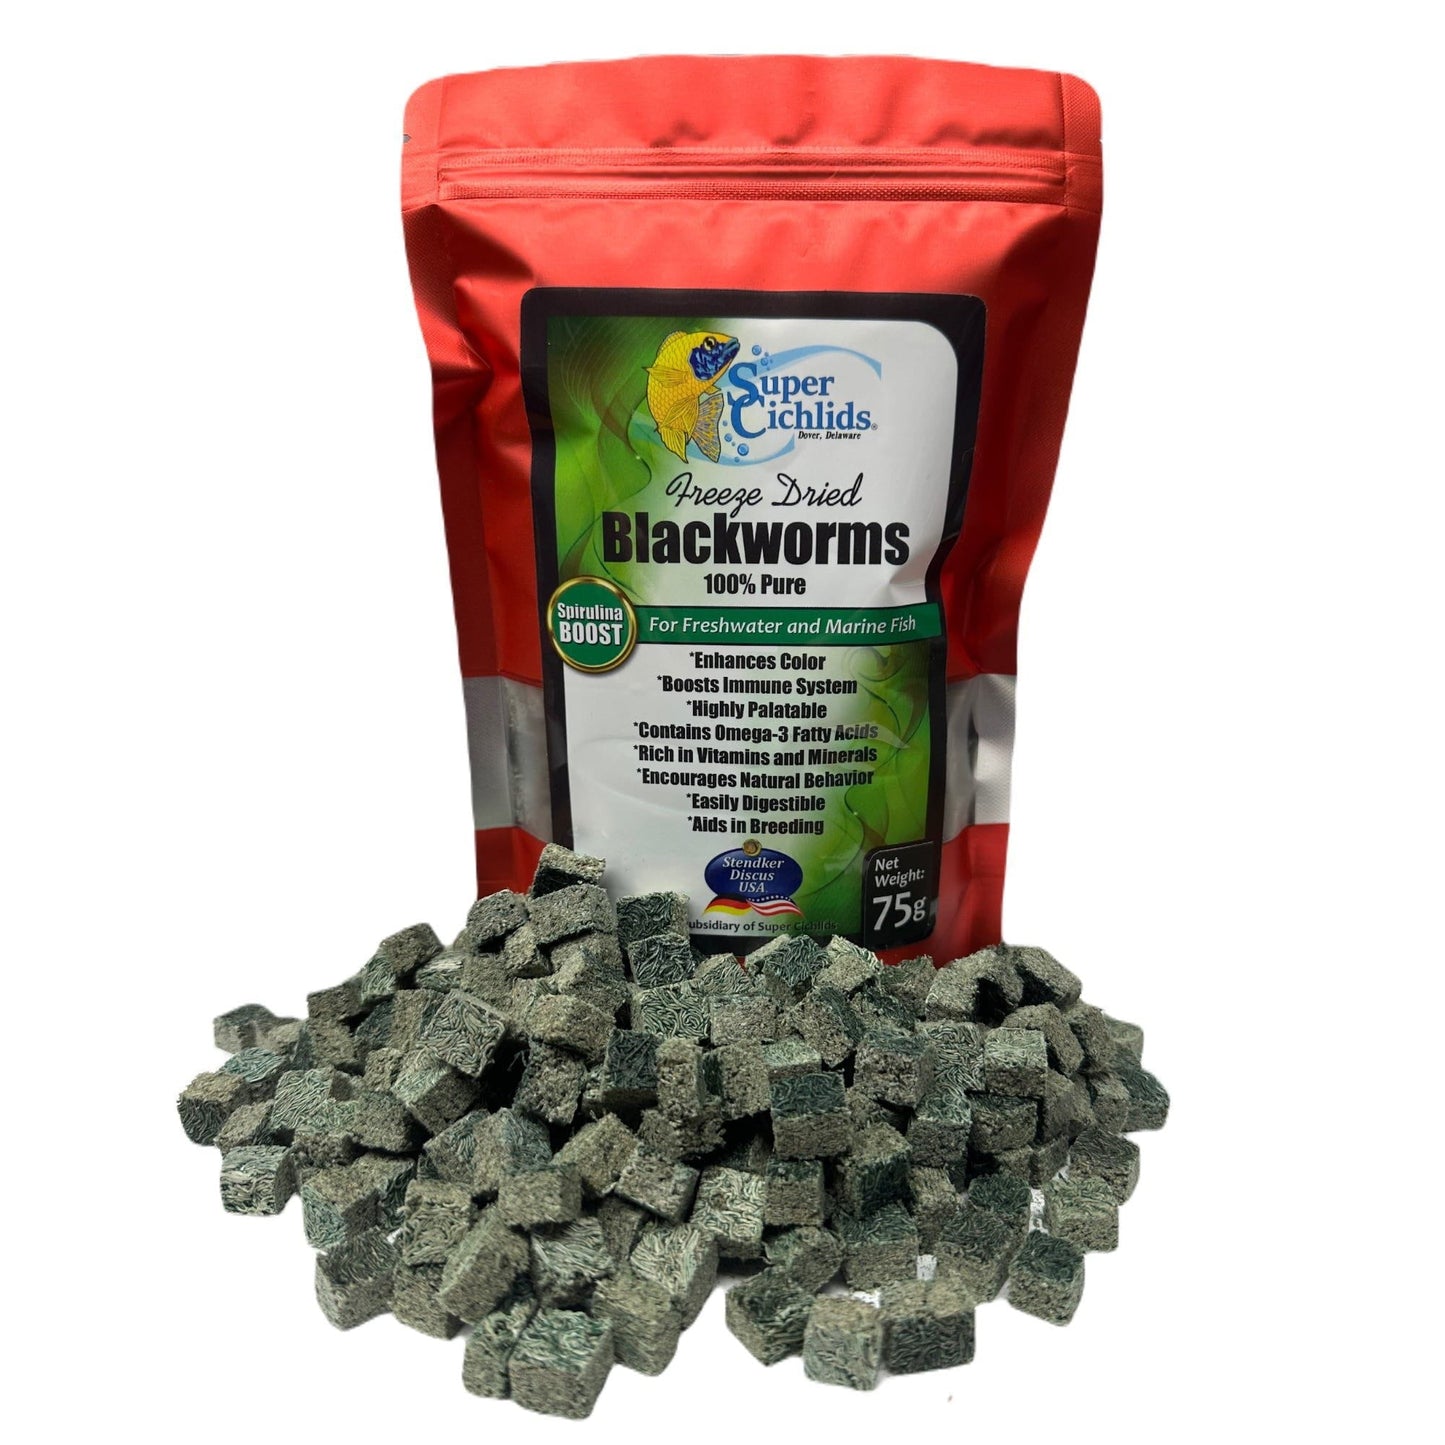 Premium Freeze Dried Blackworms for Aquatic Pets | Super Cichlids Spirulina Boost (75g) Super Cichlids